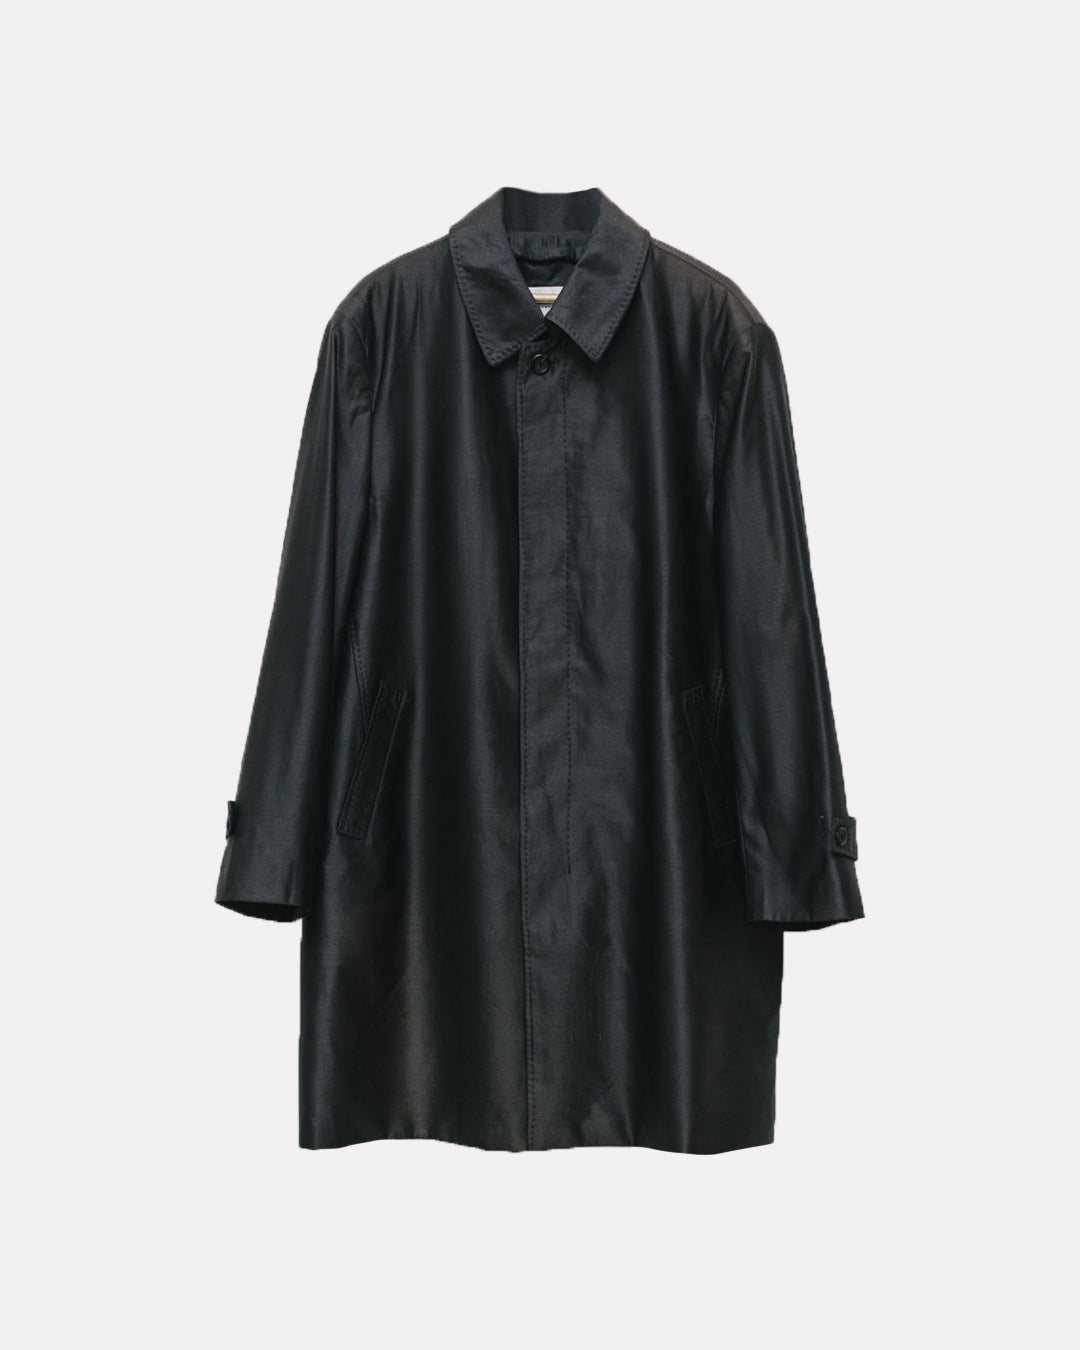 Dark charcoal dress coat